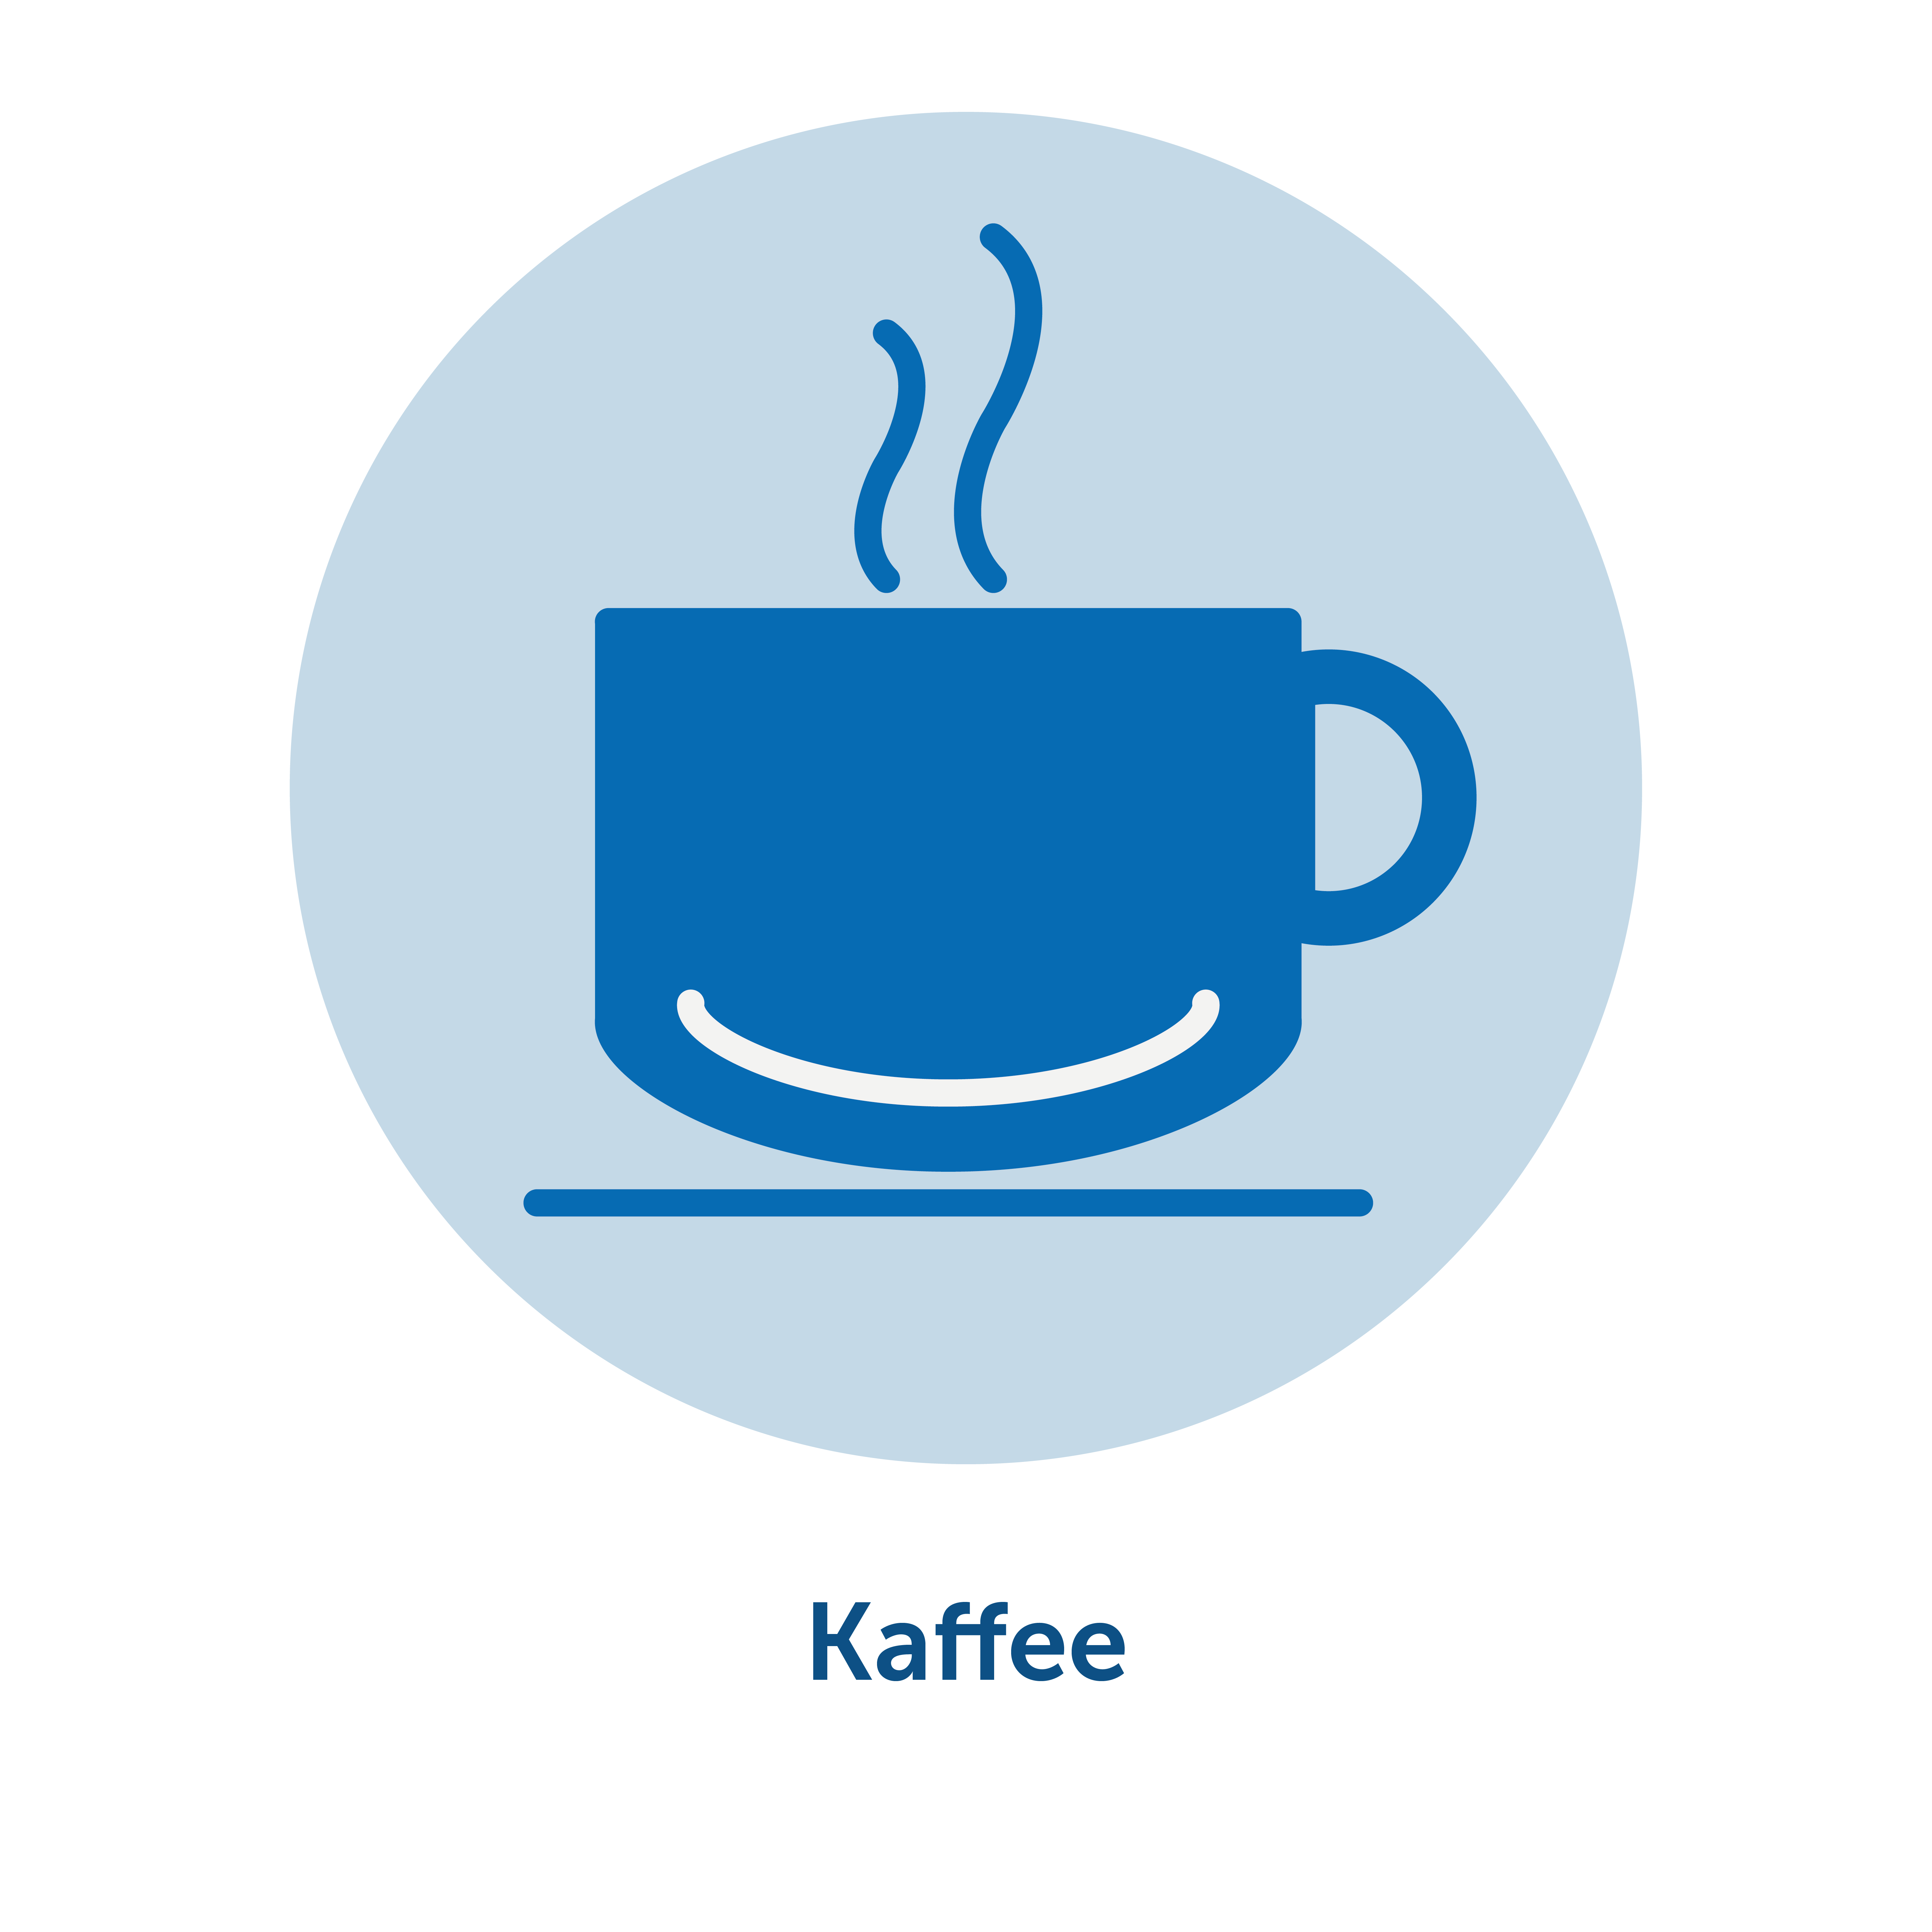 gruber_benefits_2020_Kaffee (1)